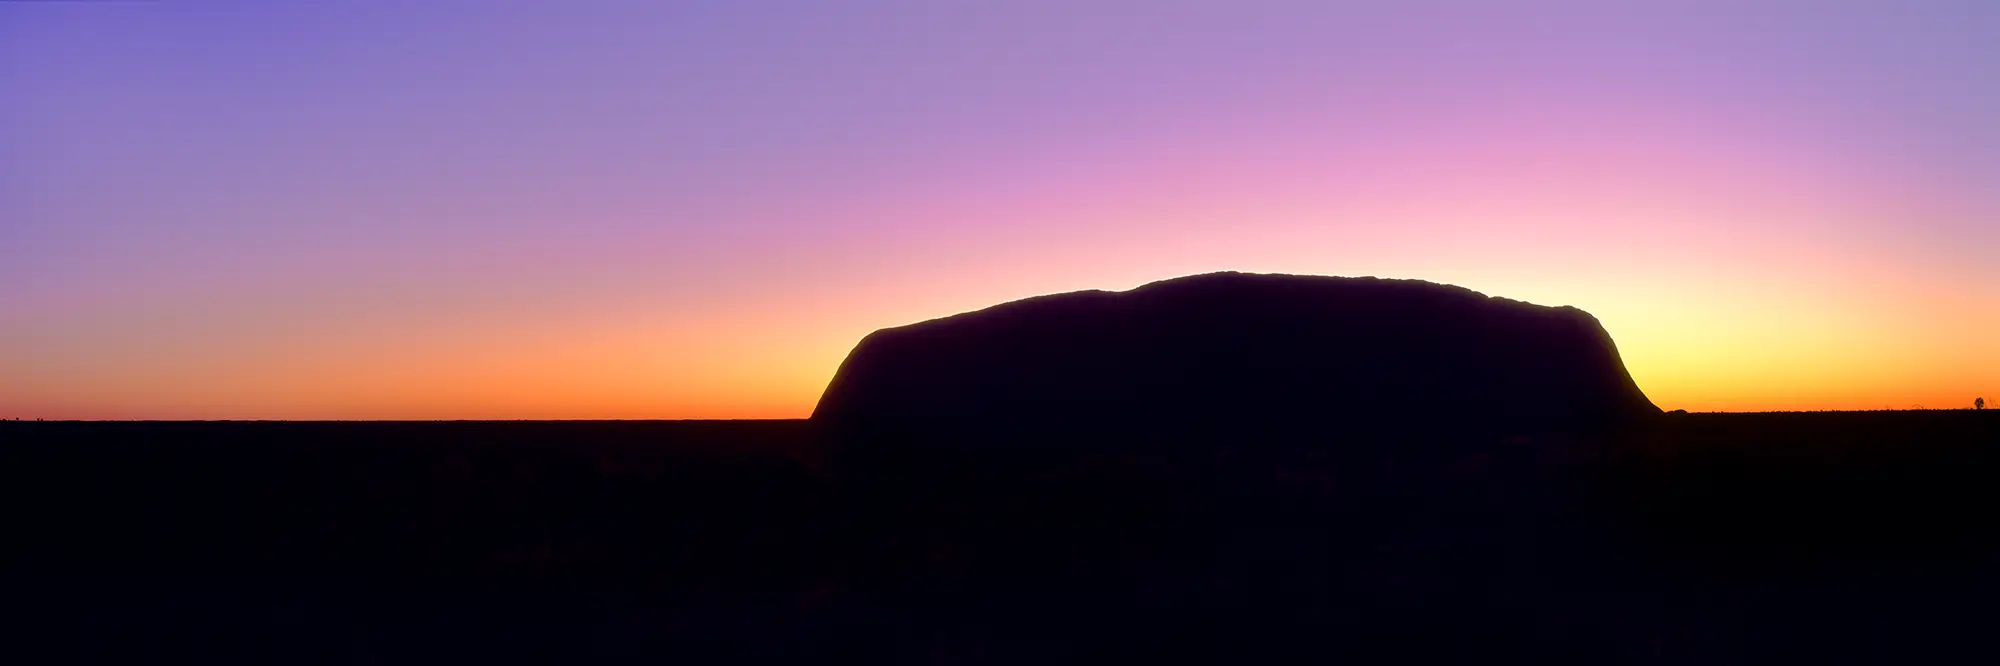 Sihouette Photos Uluru Ayres Rock Northern Territory Images Sunrise